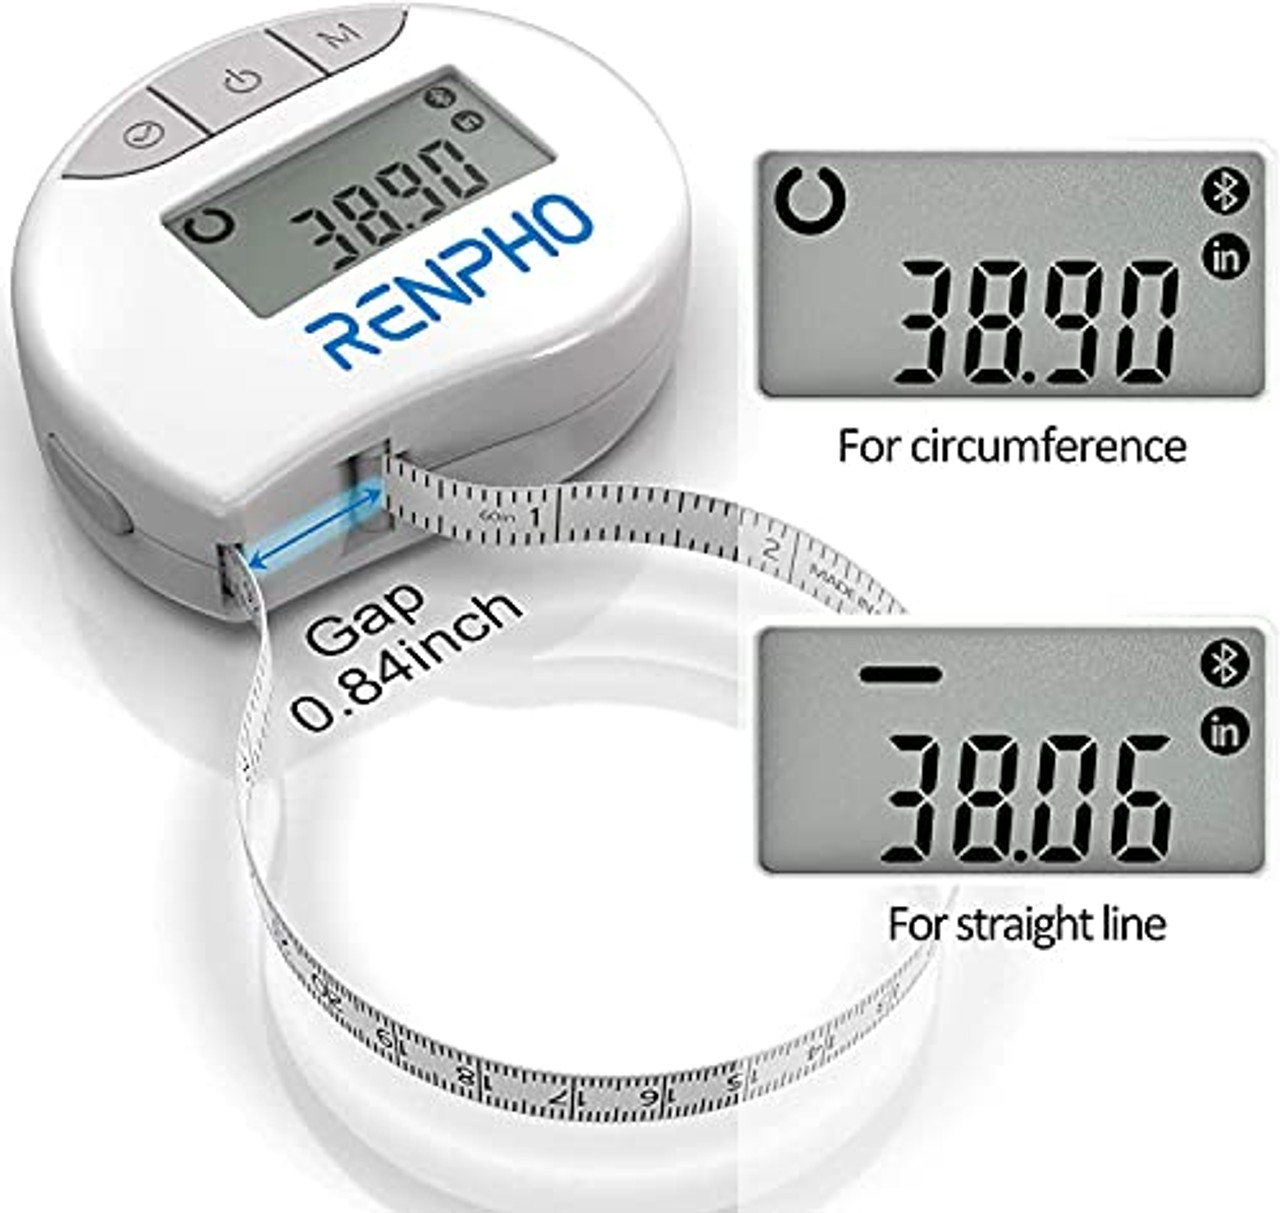 Smart Body Tape Measure, FITINDEX Bluetooth Digital Measuring Tape